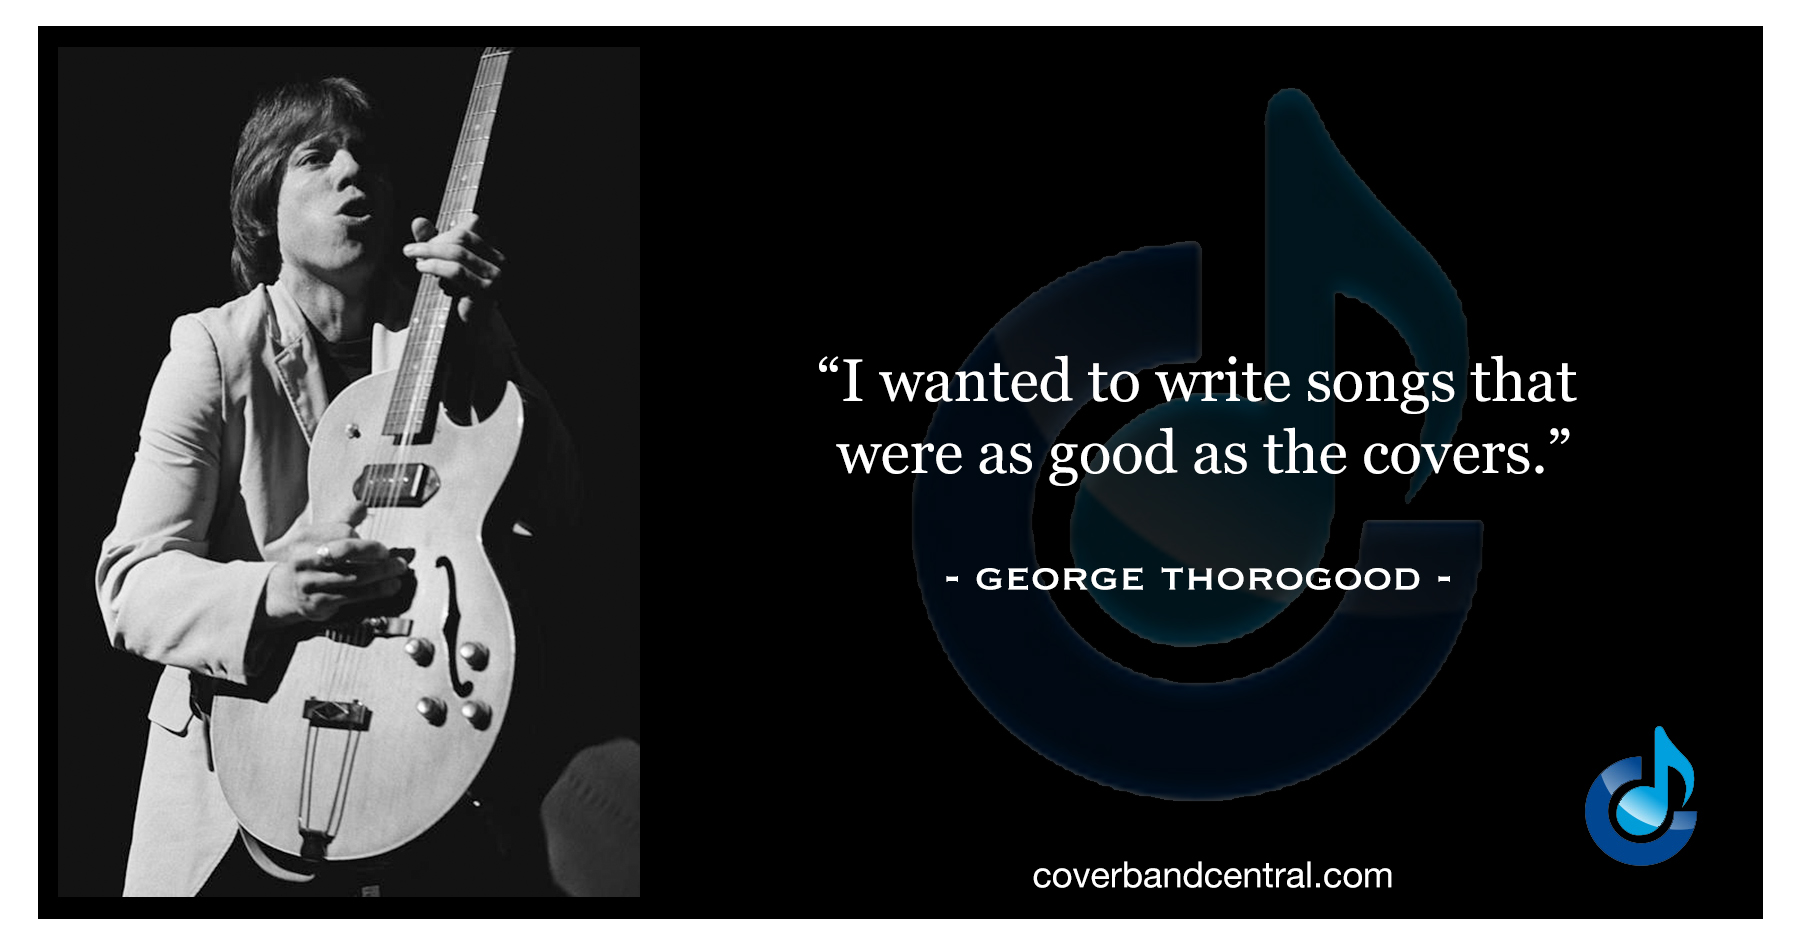 George Thorogood quote